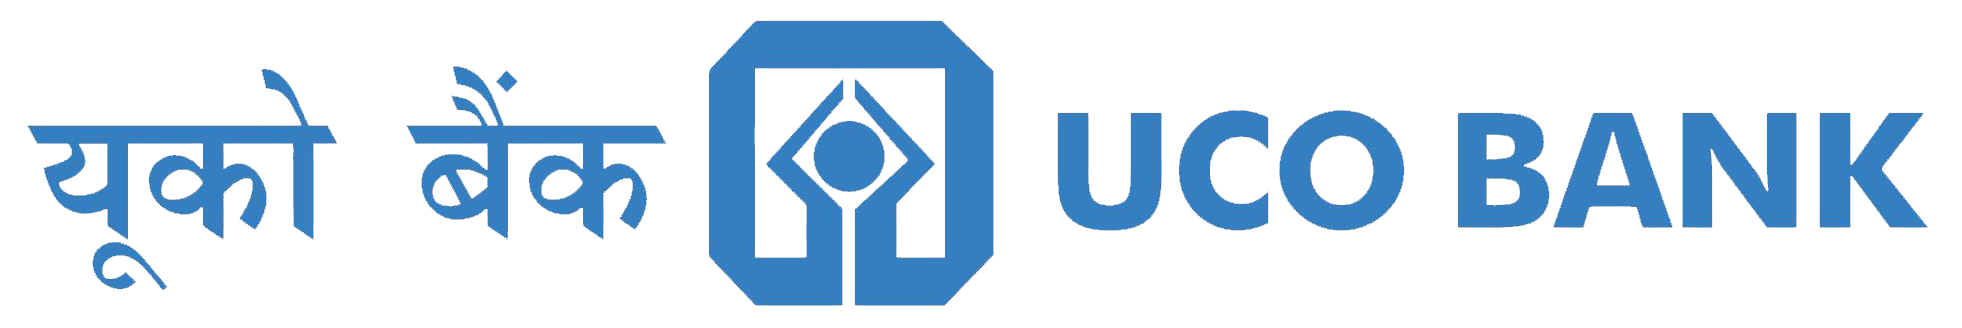 uco-bank-logo.png